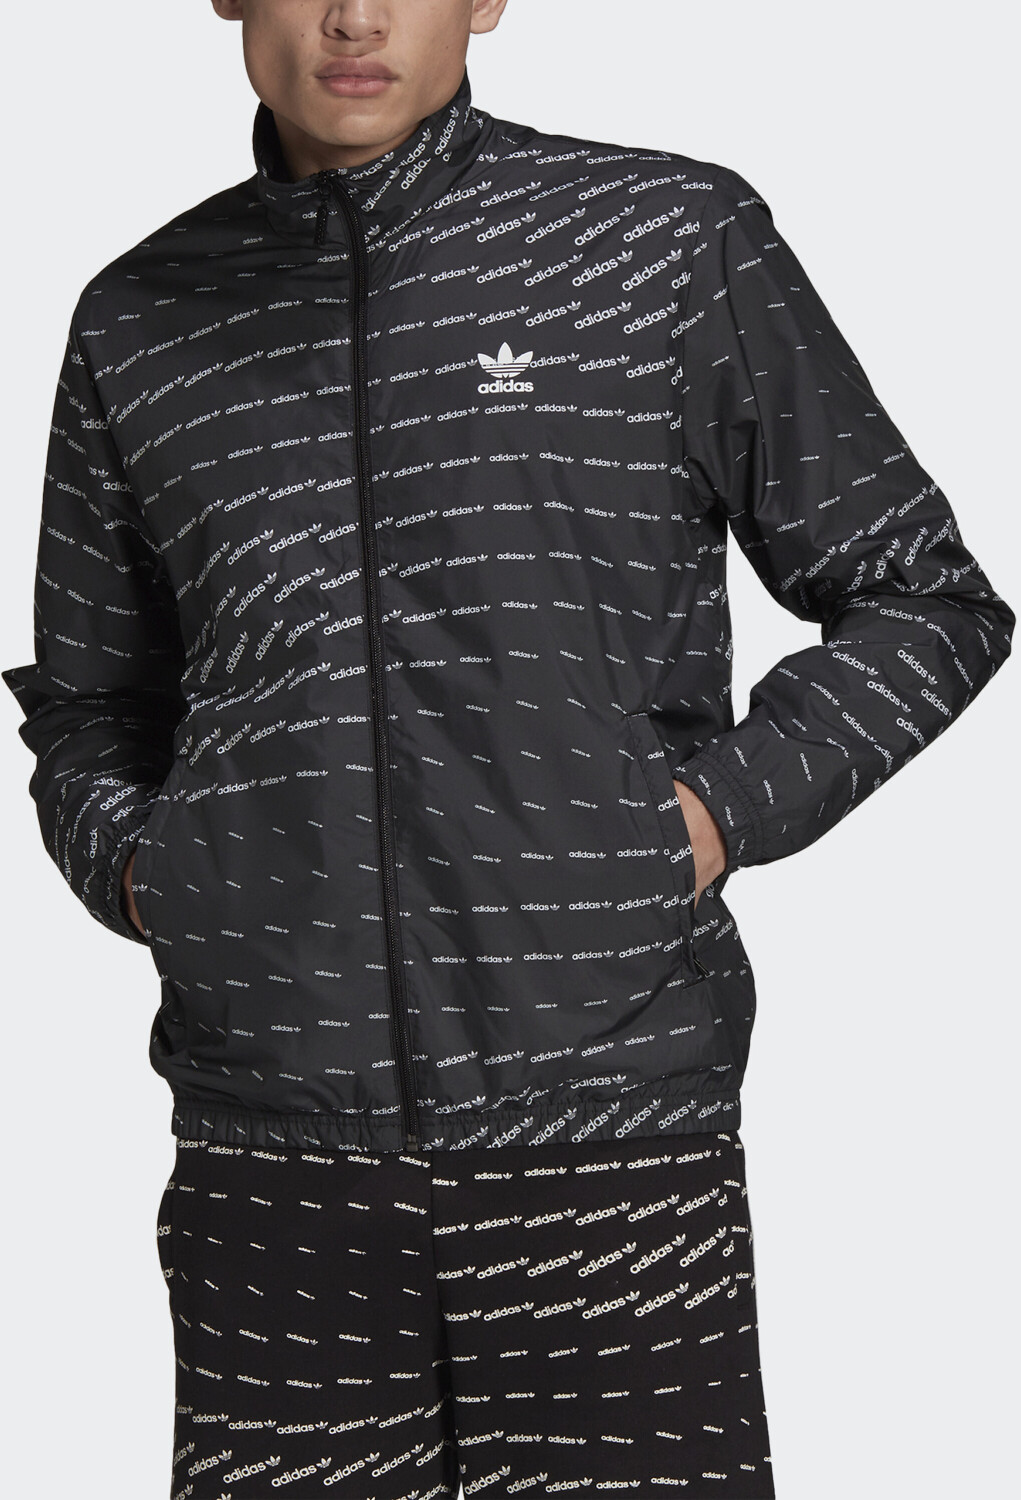 Adidas Graphics Monogram Originals Jacket (H13485) black/white ab 39,95 € |  Preisvergleich bei